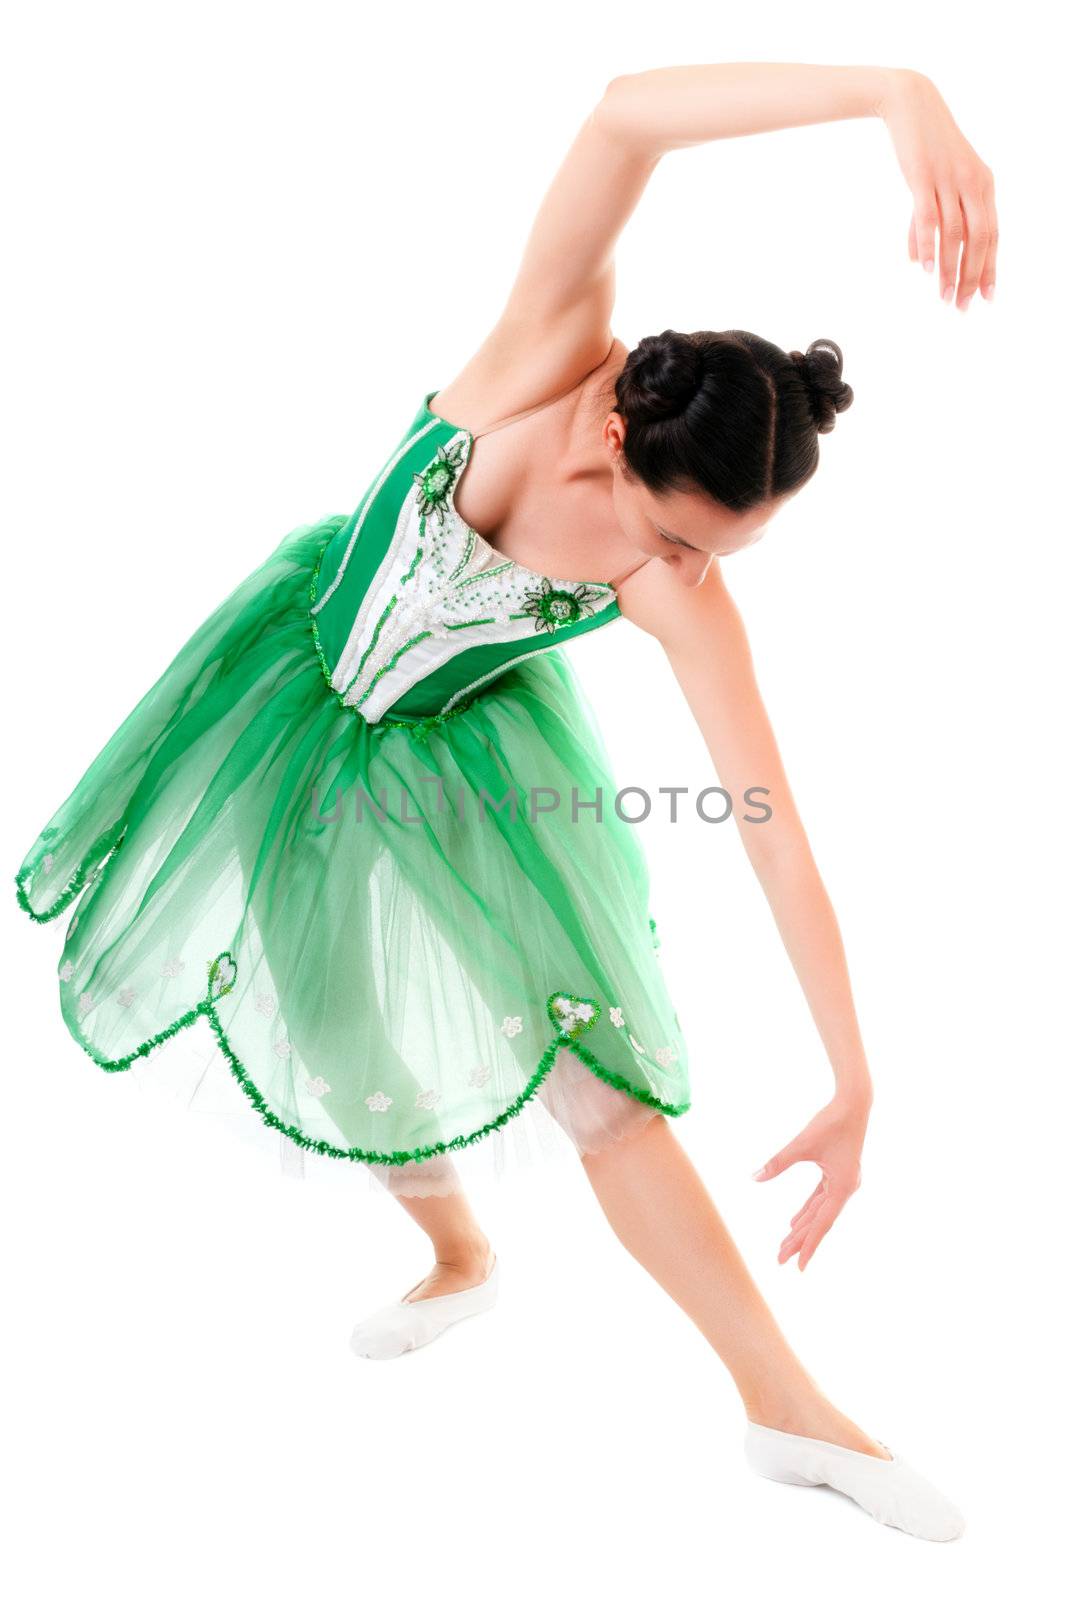 Exercising ballerina in green dress isolated on white background